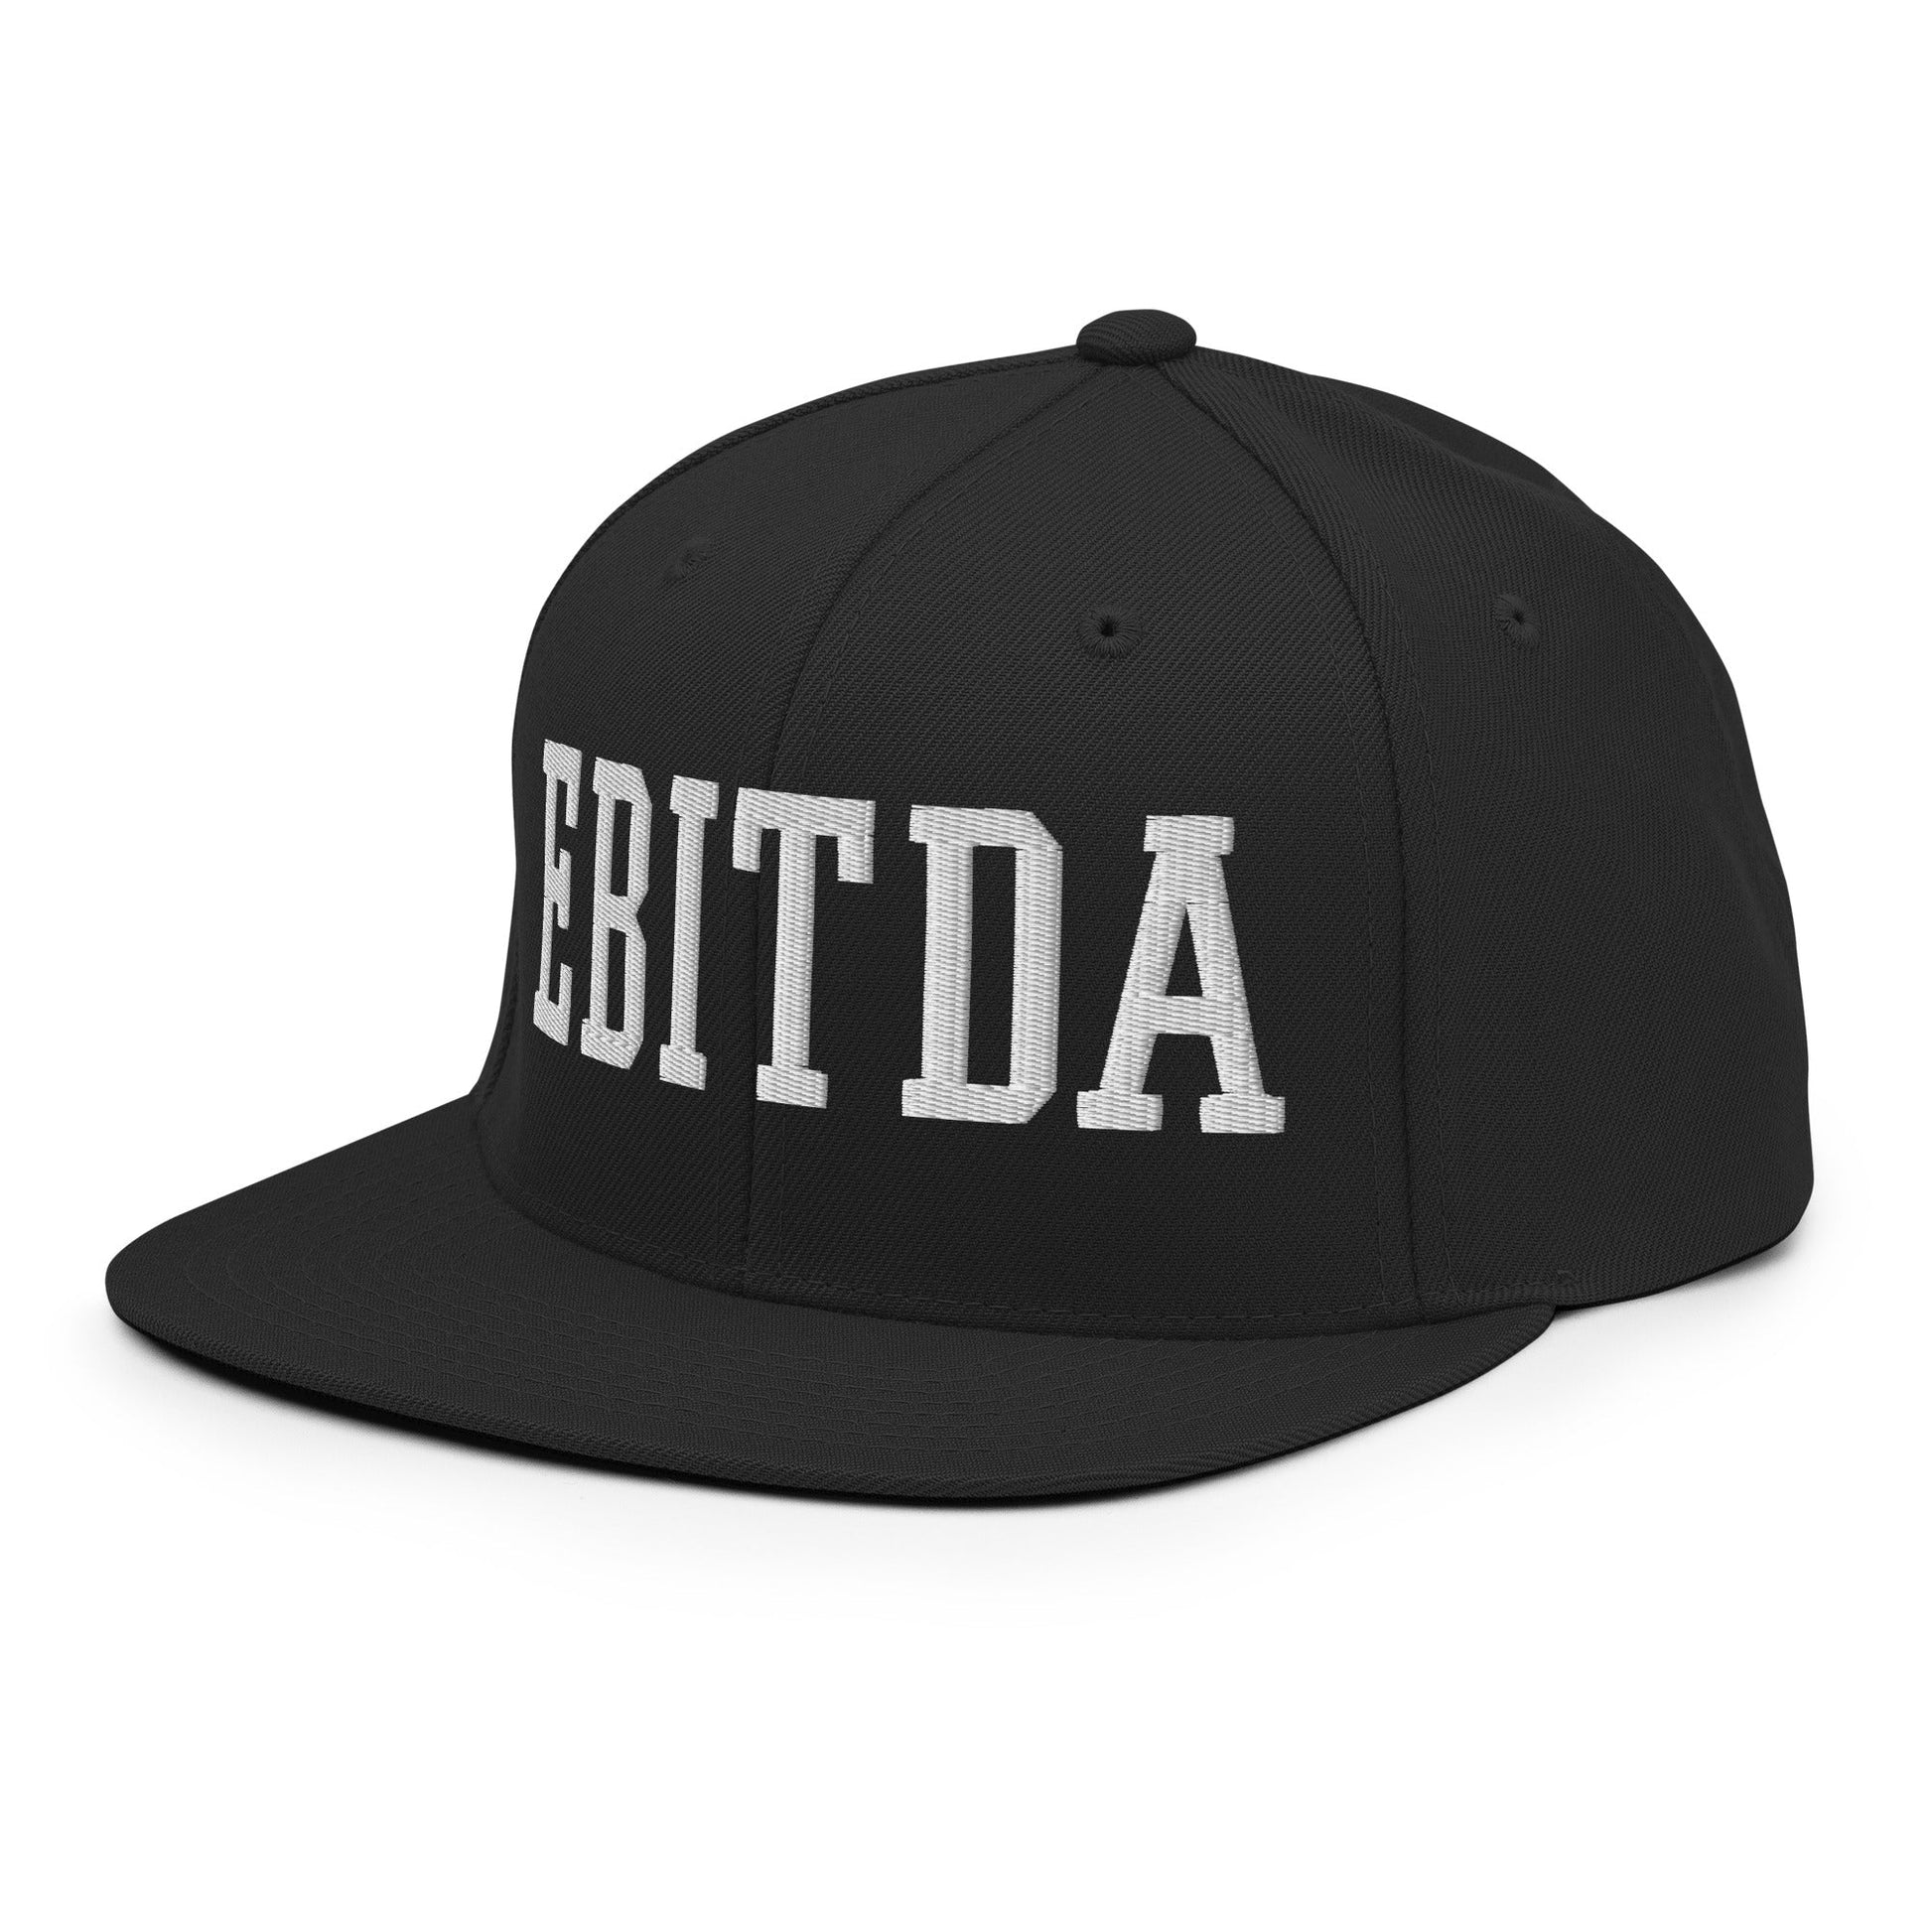 EBITDA Varsity Letterman Block Snapback Hat Black